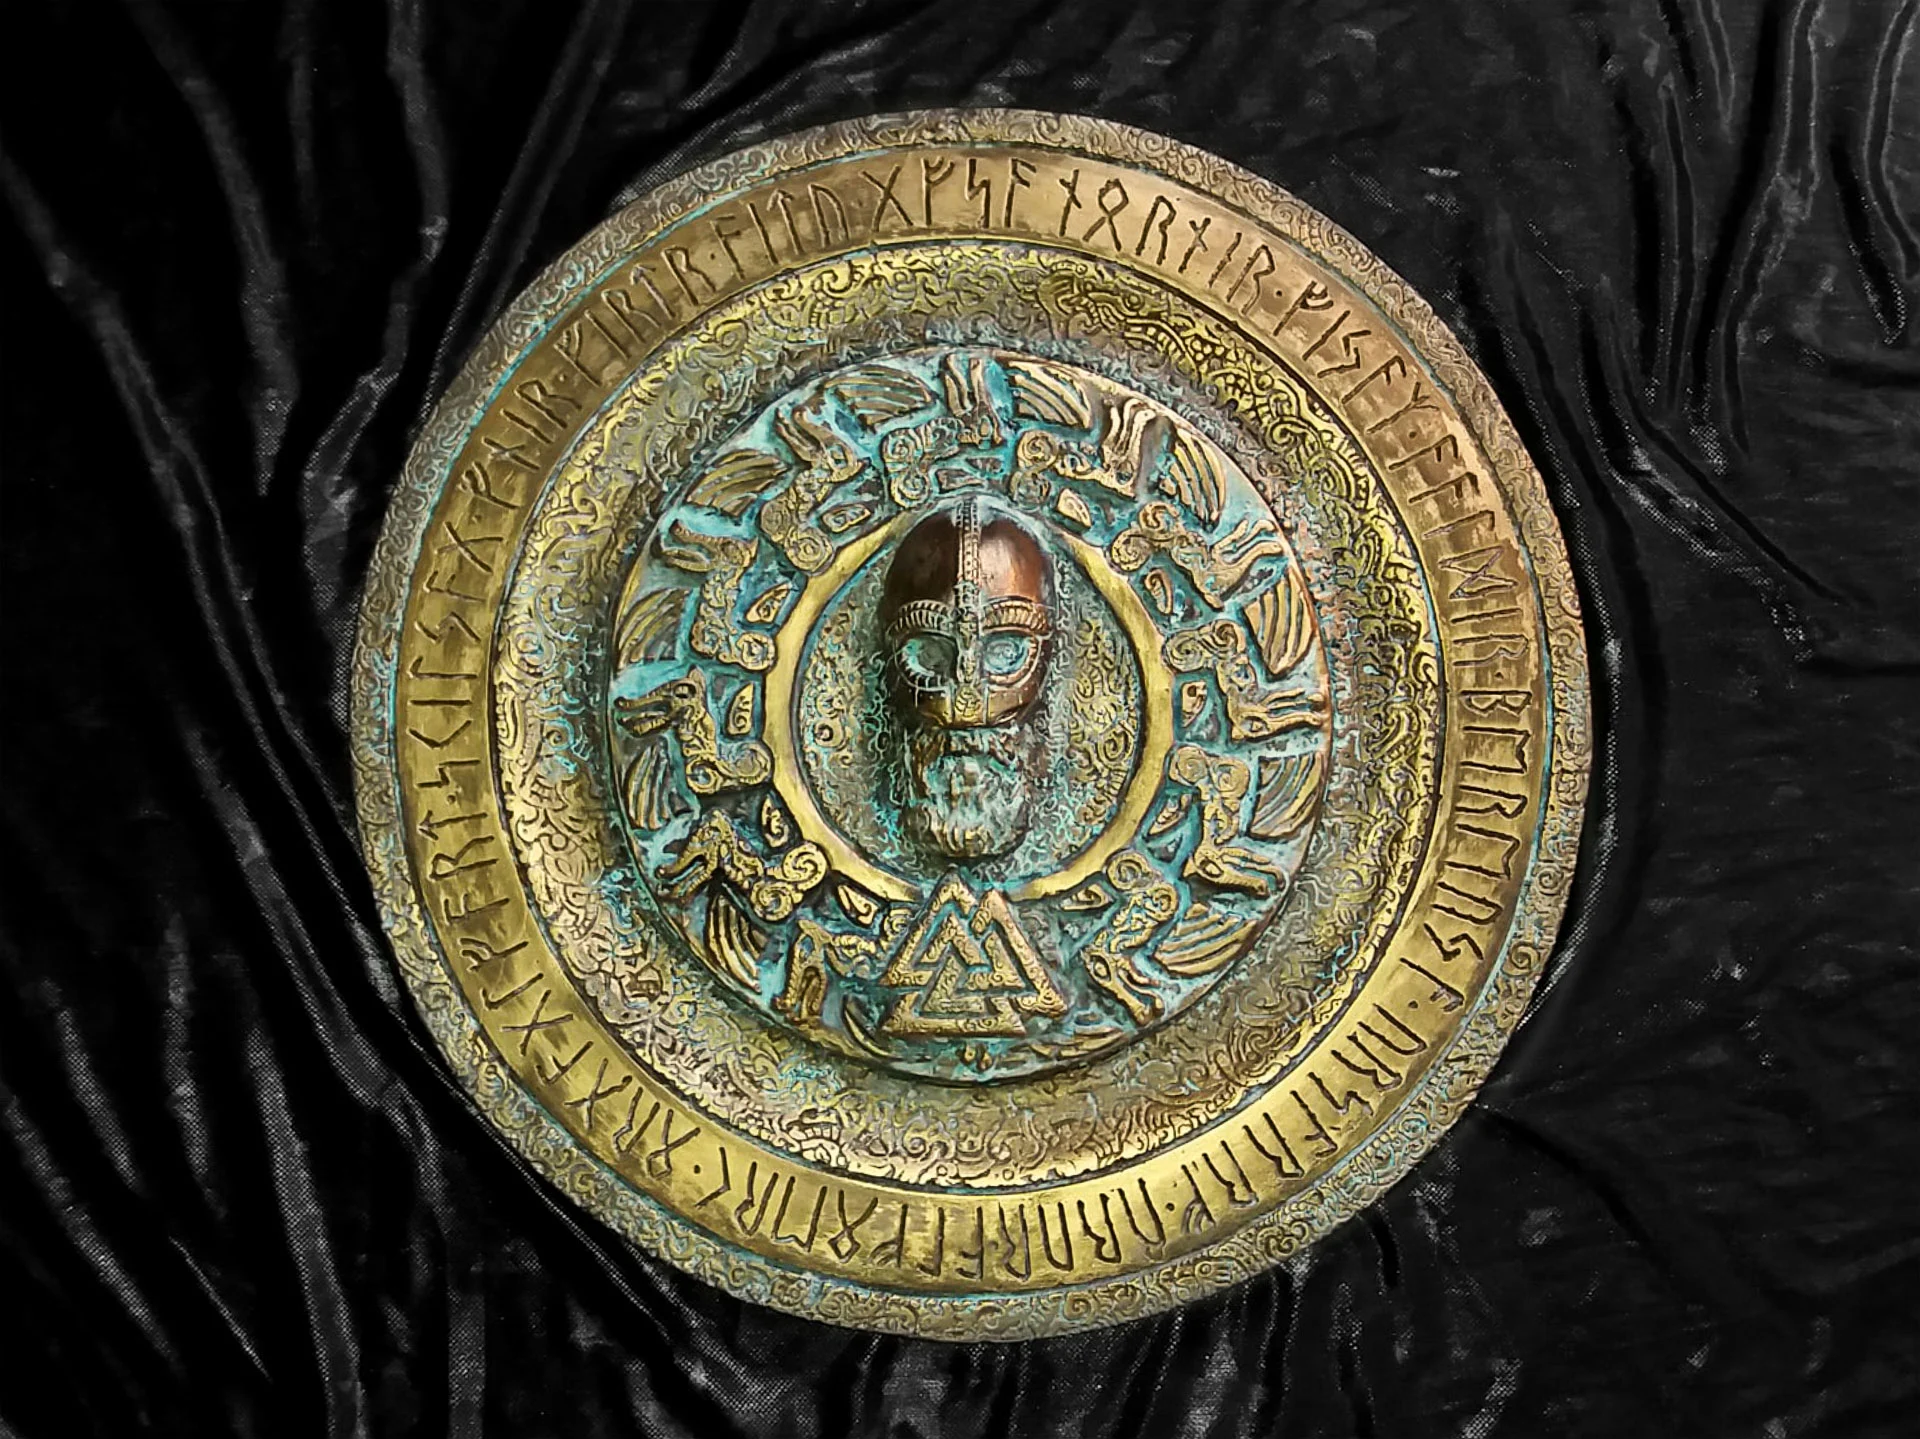 Patinatura blu rame - Finitura antica per oggetti in rame, bronzo o ottone